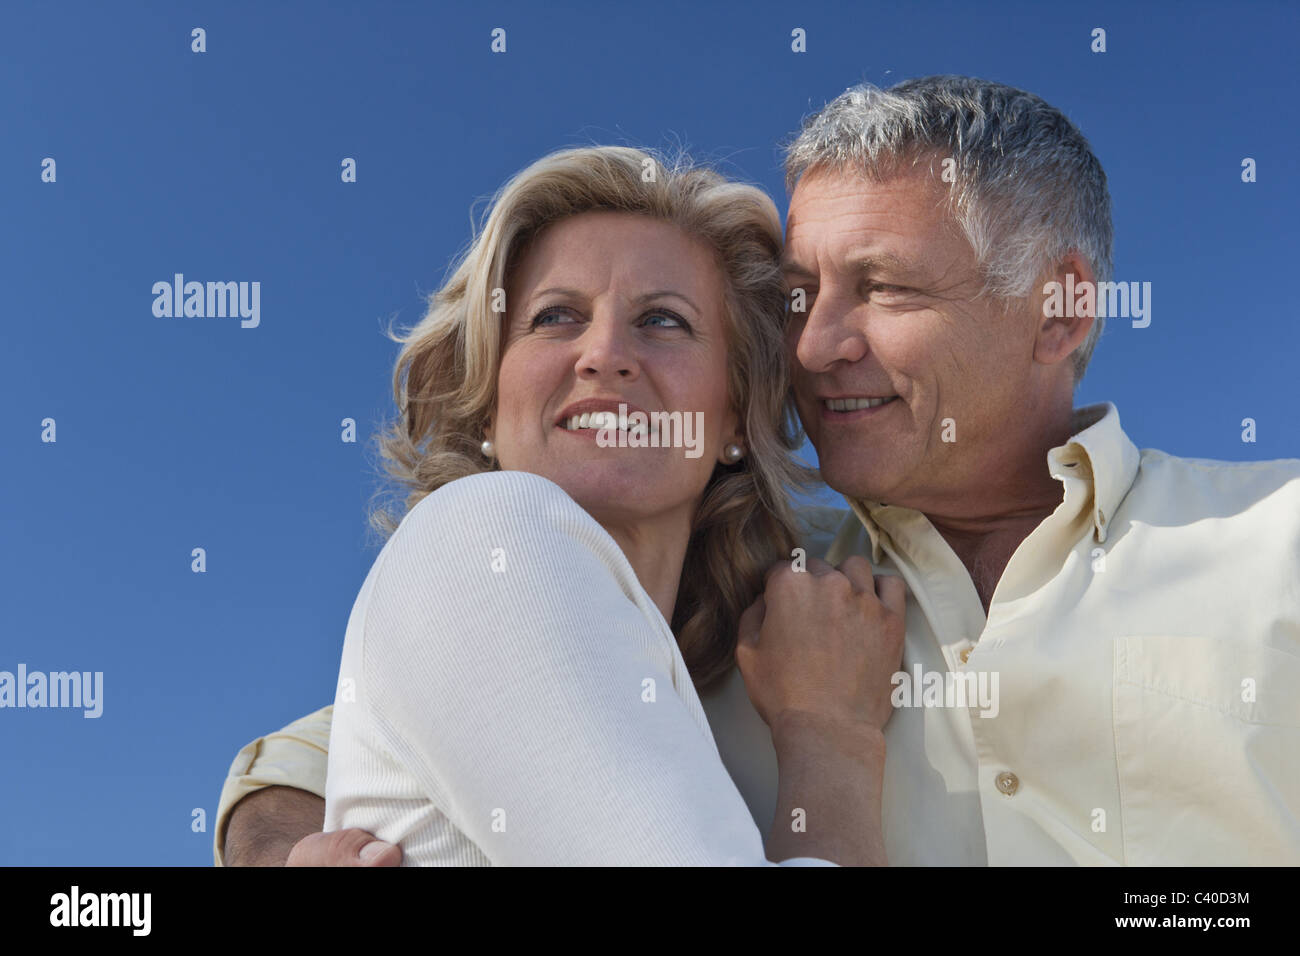 Closeup of mature couple embracing Banque D'Images